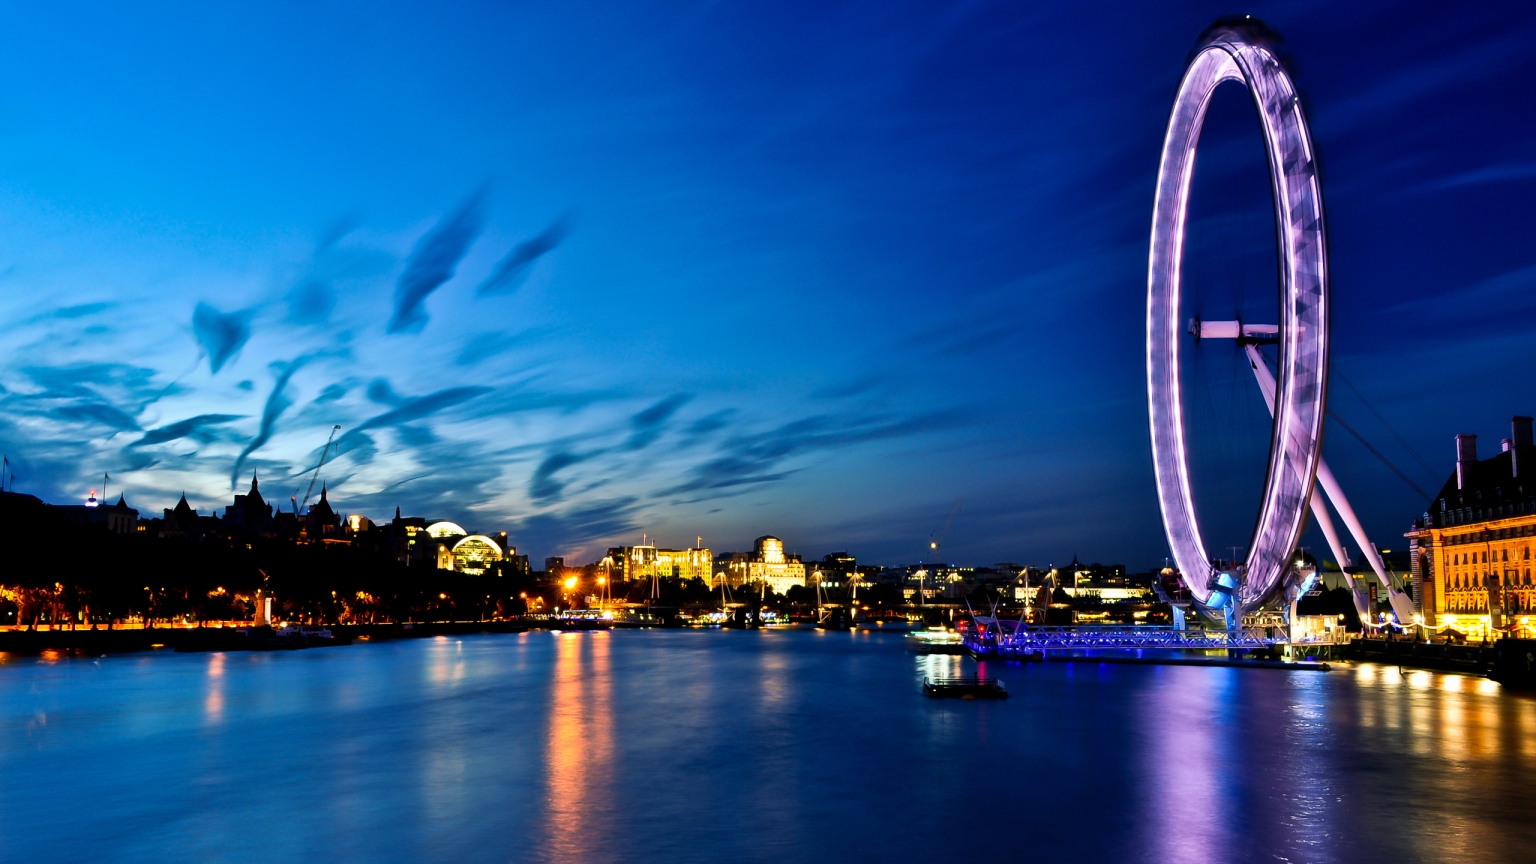 London Eye View for 1536 x 864 HDTV resolution